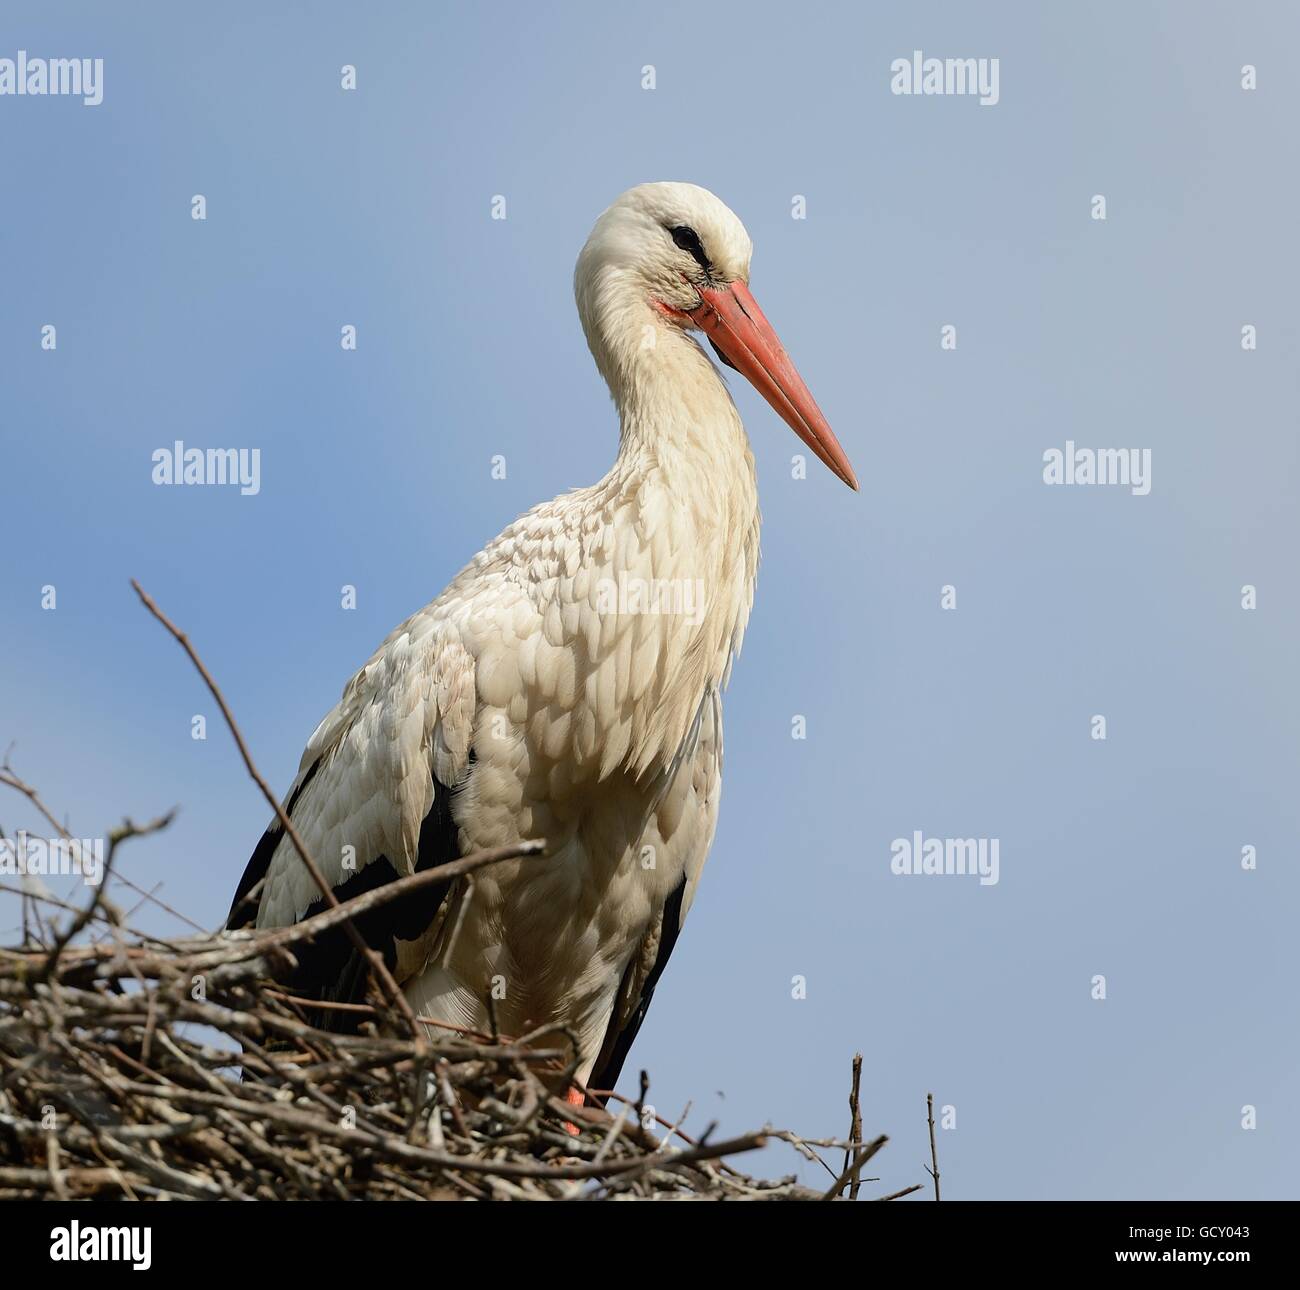 Stork, White Stork, Bird, Wading Bird, Beak, Nest, Germany, Animal, Feathers Stock Photo